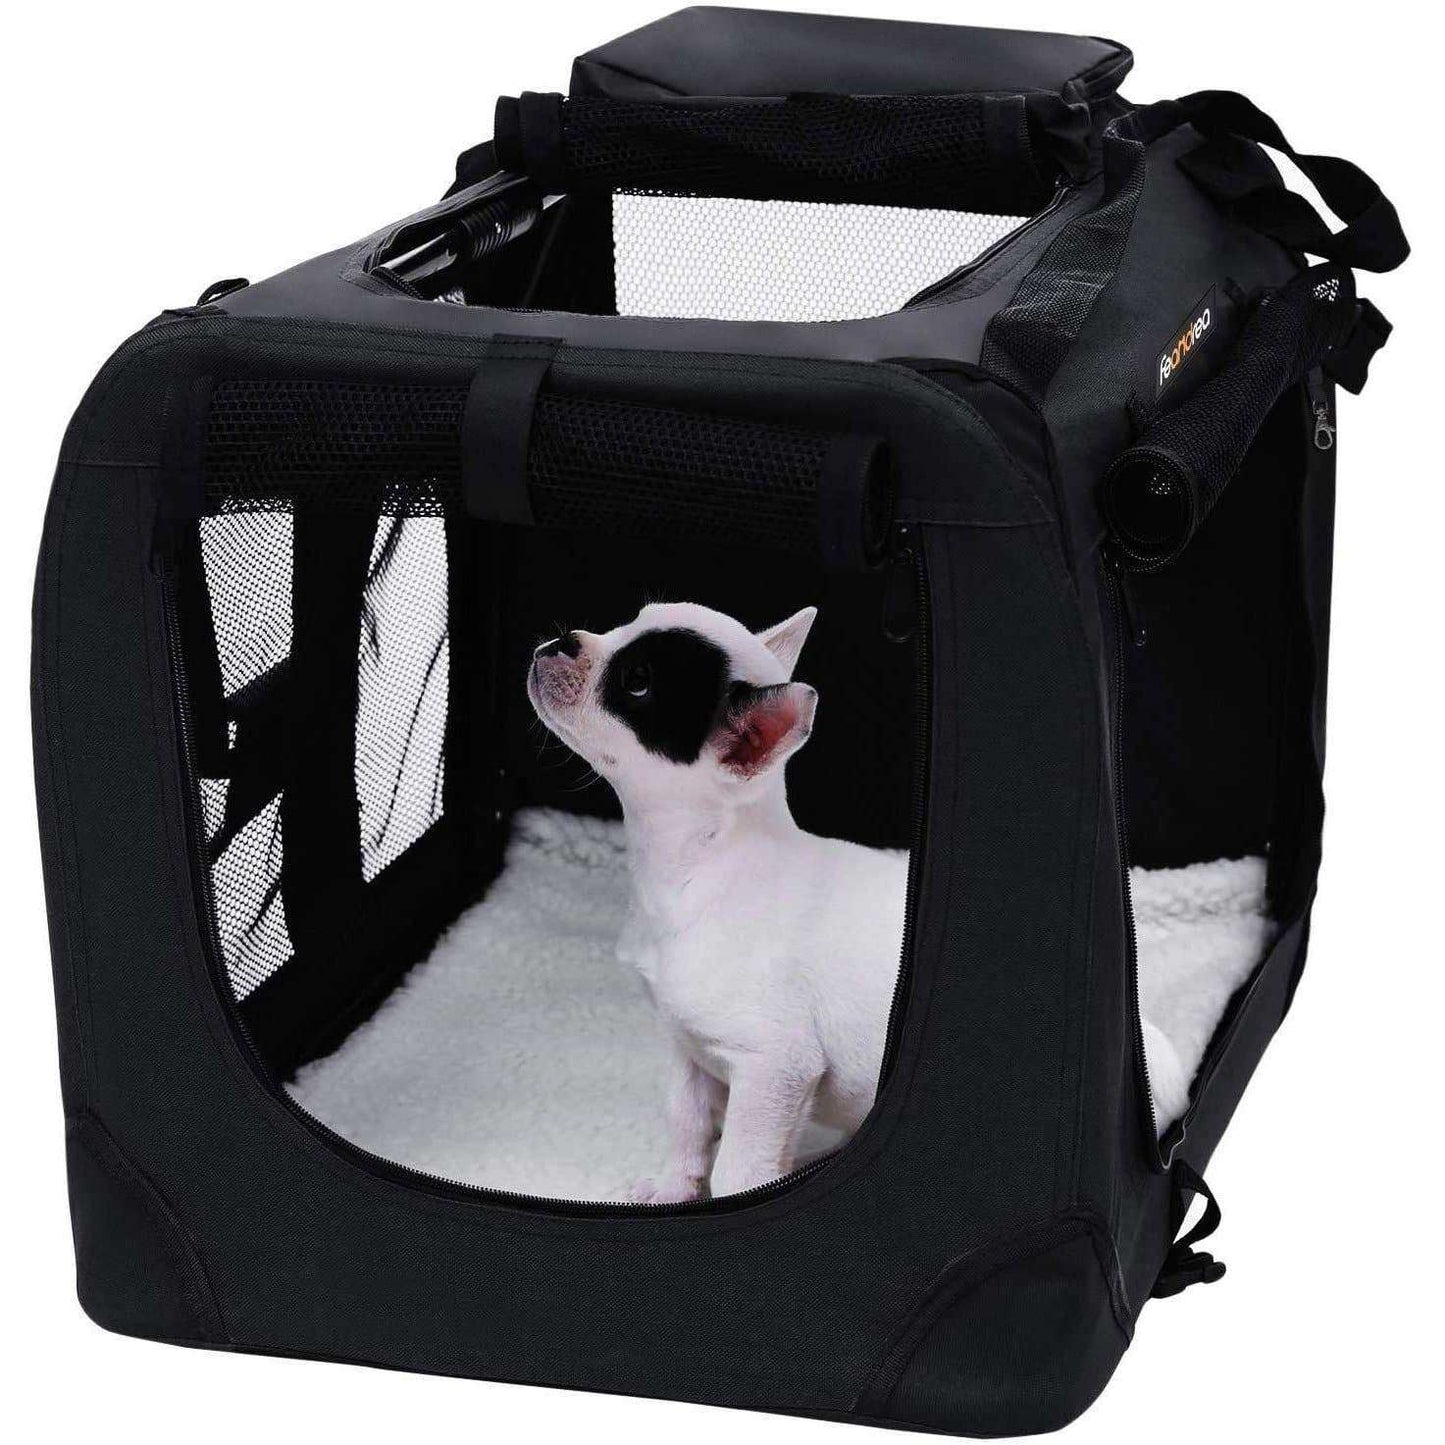 Nancy's Cholula Transport Box - Dog Box - Transport Bag - Foldable Cat Box - Black 50x35x35 cm